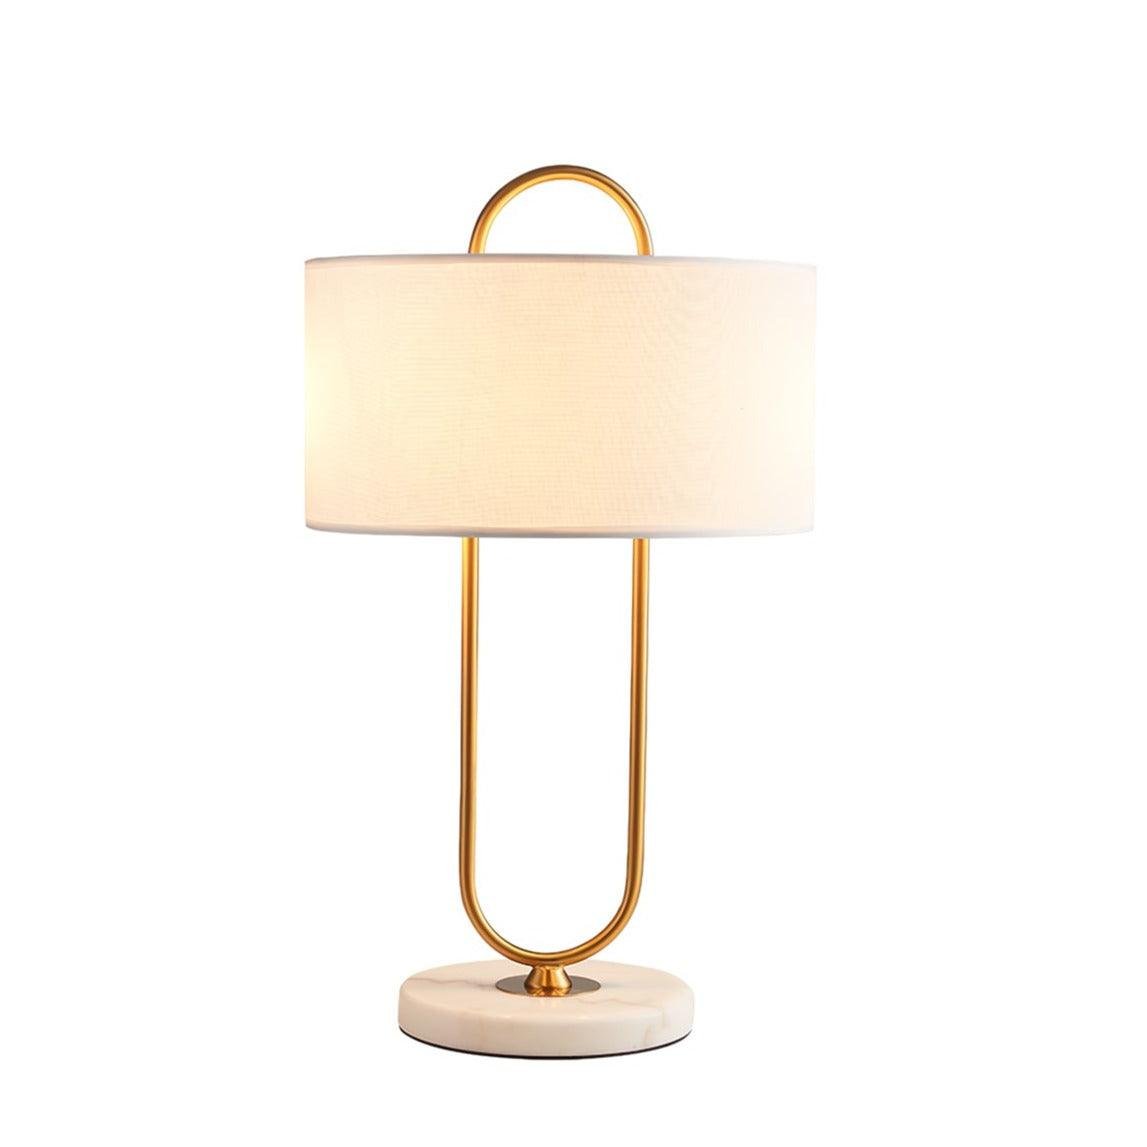 Warner Table Lamp - Diameter 13″ x Height 22.8″ , Diameter 33cm x Height 58cm , Gold and White , European Plug.